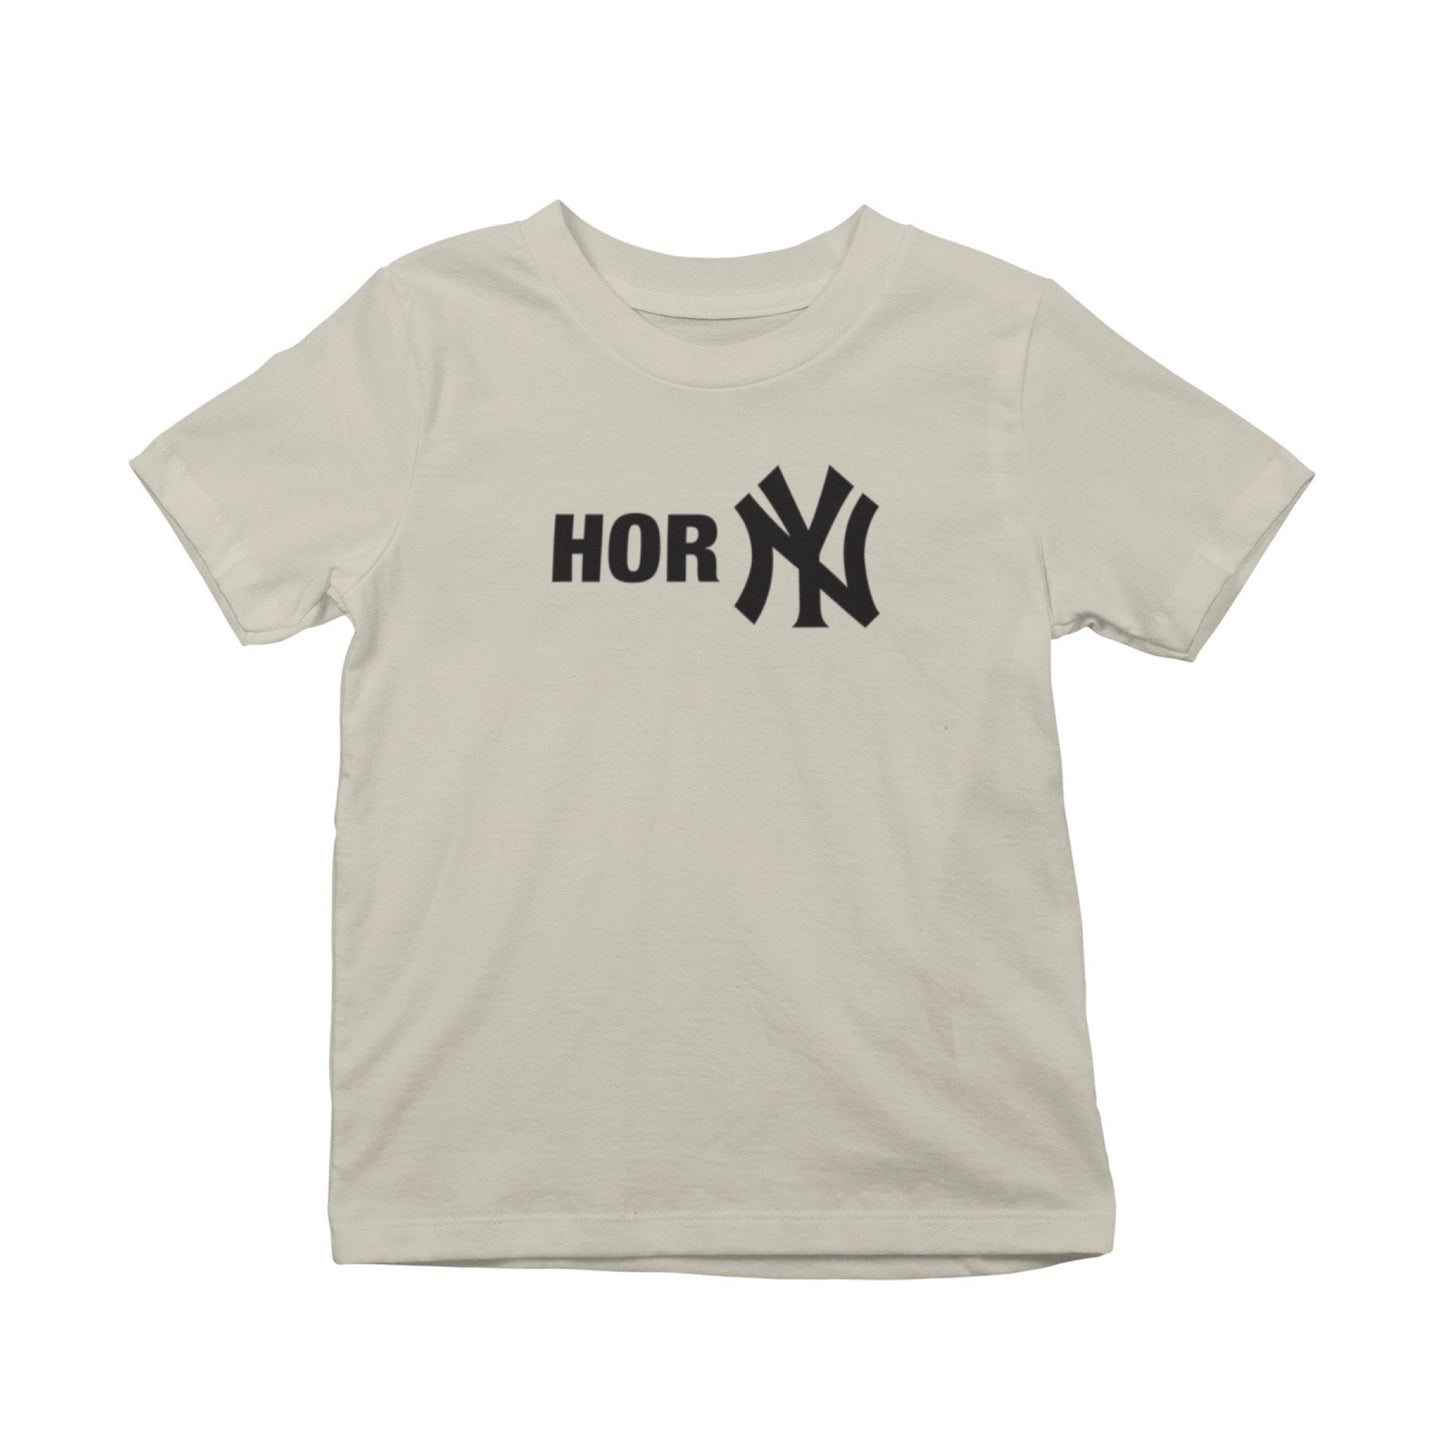 HorNY T-Shirt